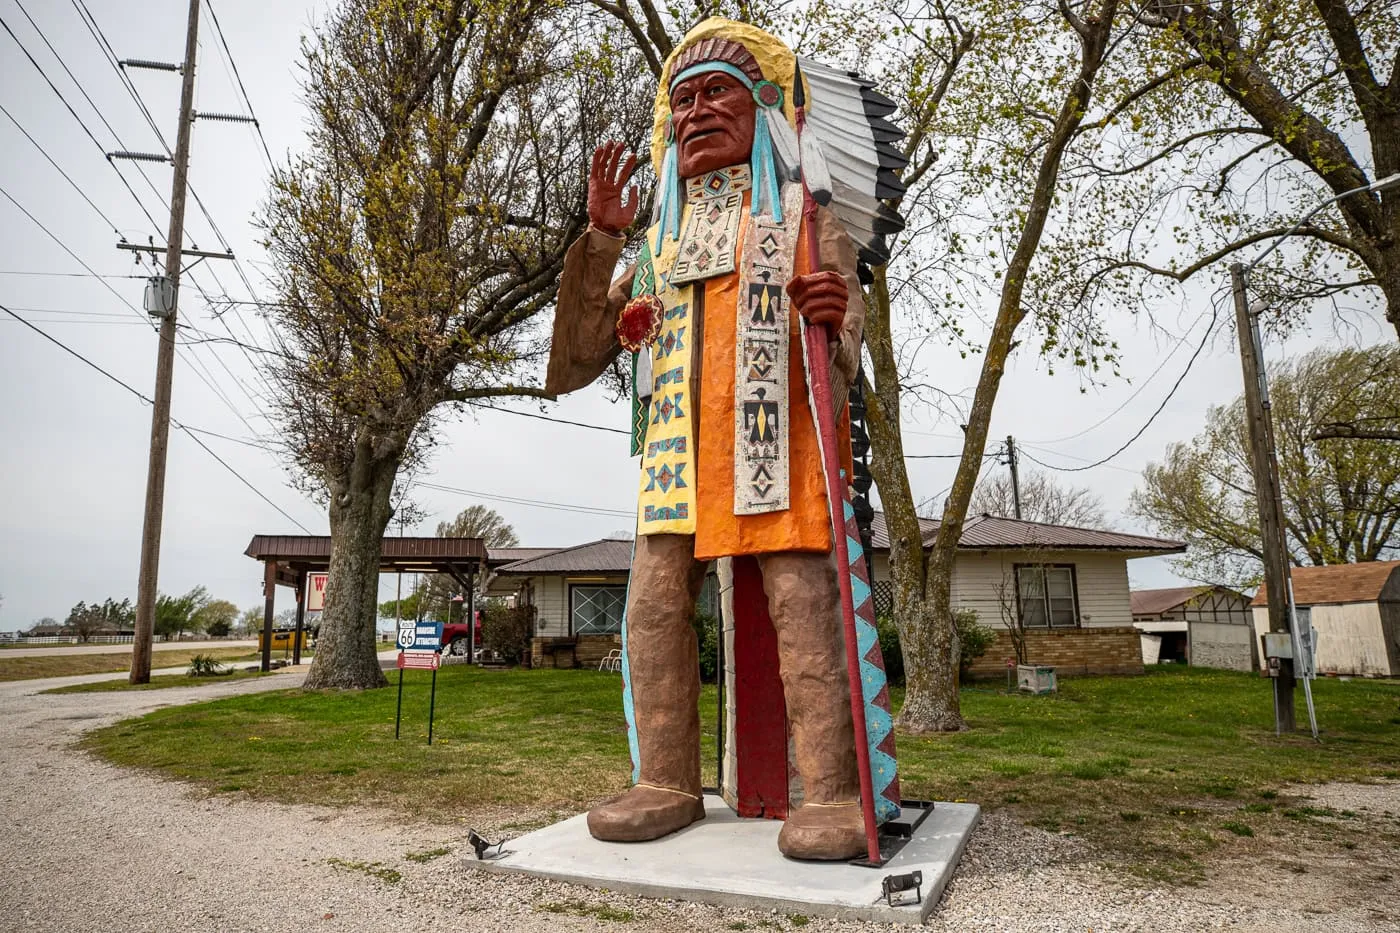 The Big Indian statue at Vinita, Oklahoma Route 66 Restaurant